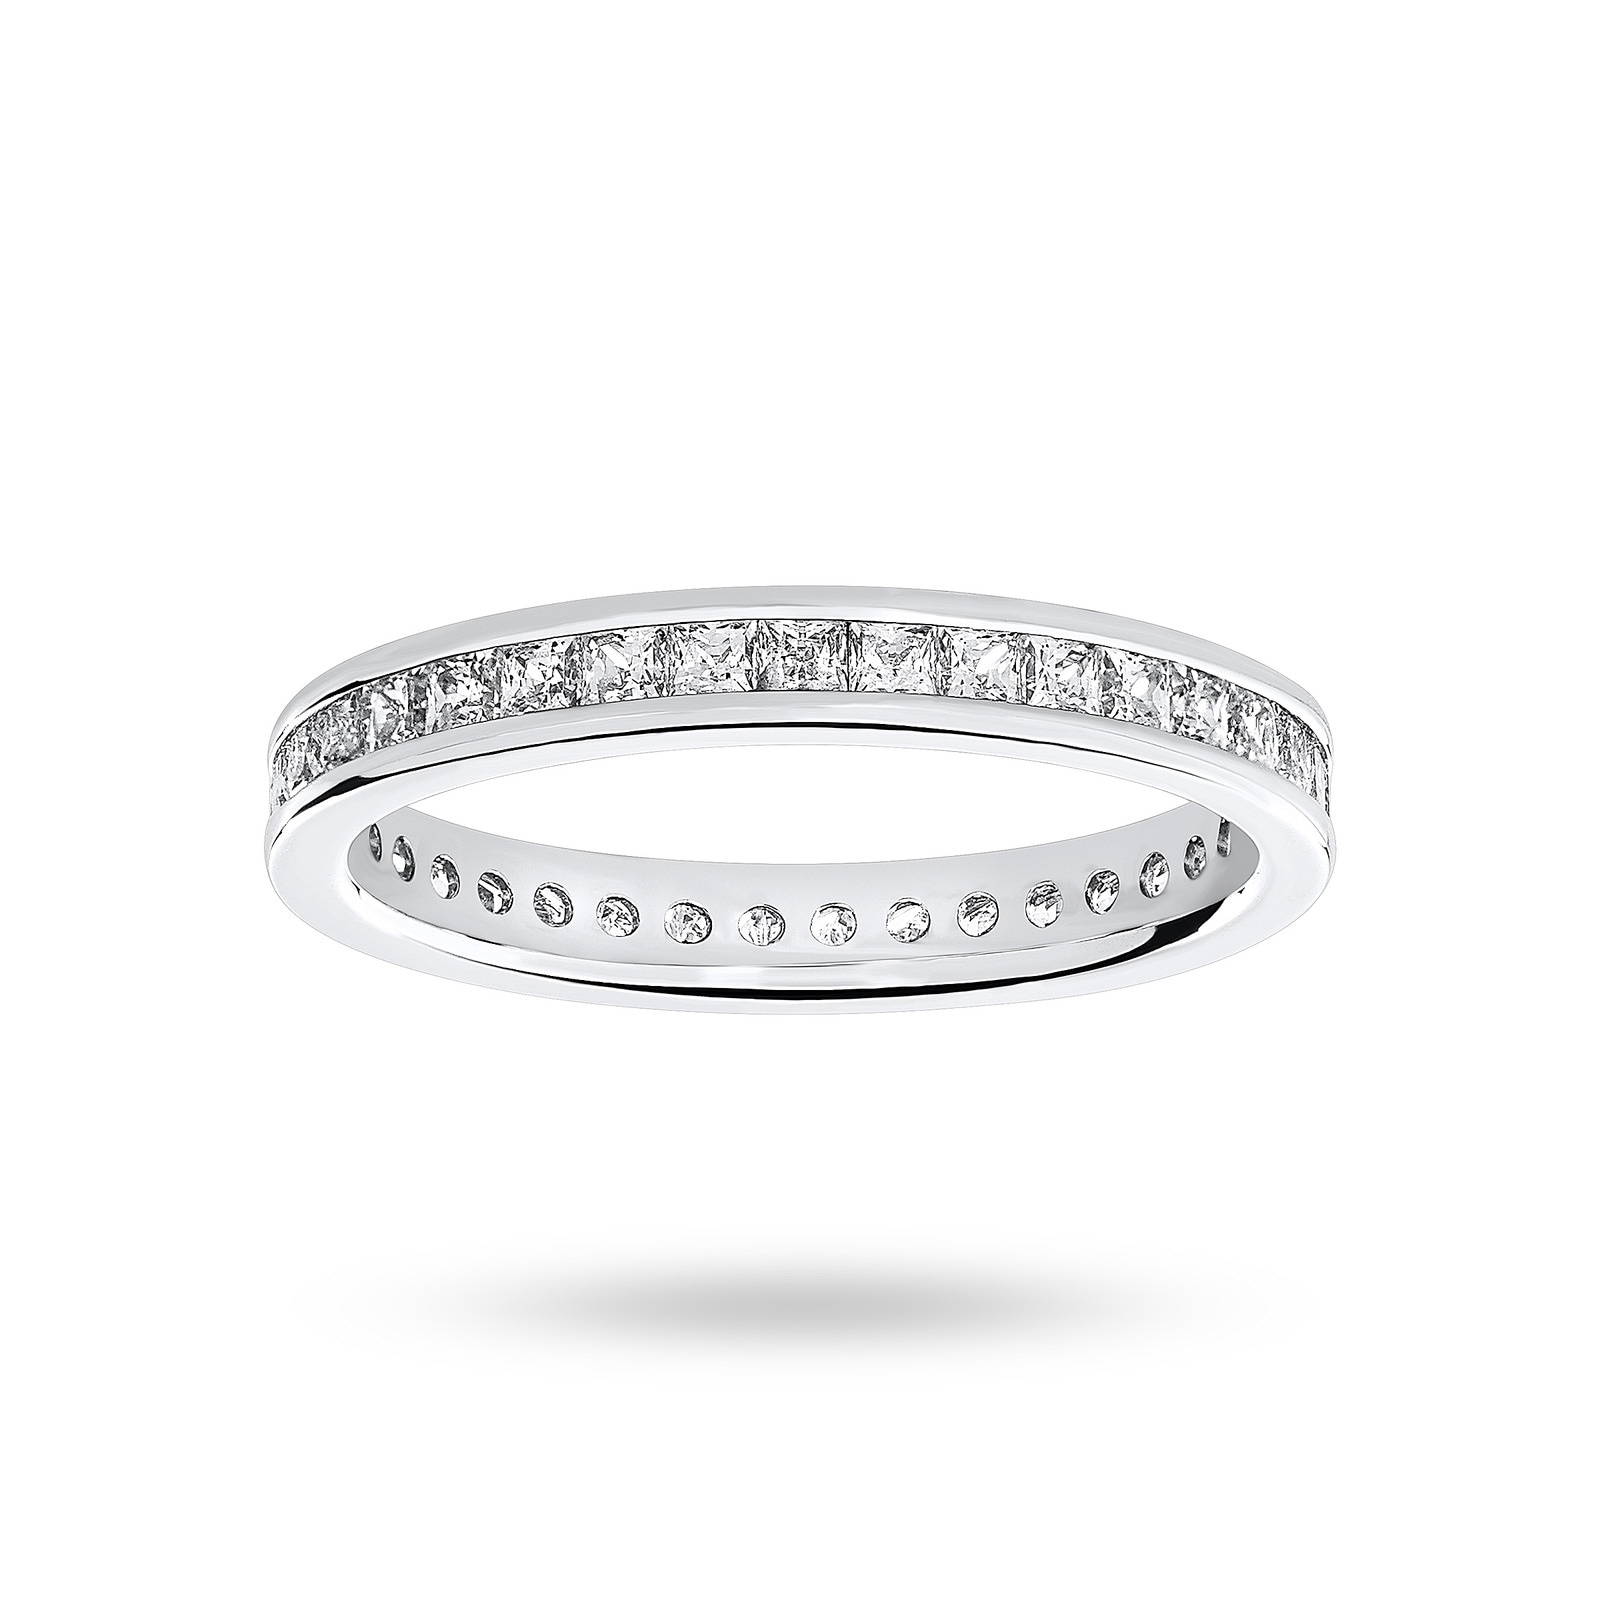 18 Carat White Gold 1.00 Carat Princess Cut Channel Set Full Eternity Ring - Ring Size M